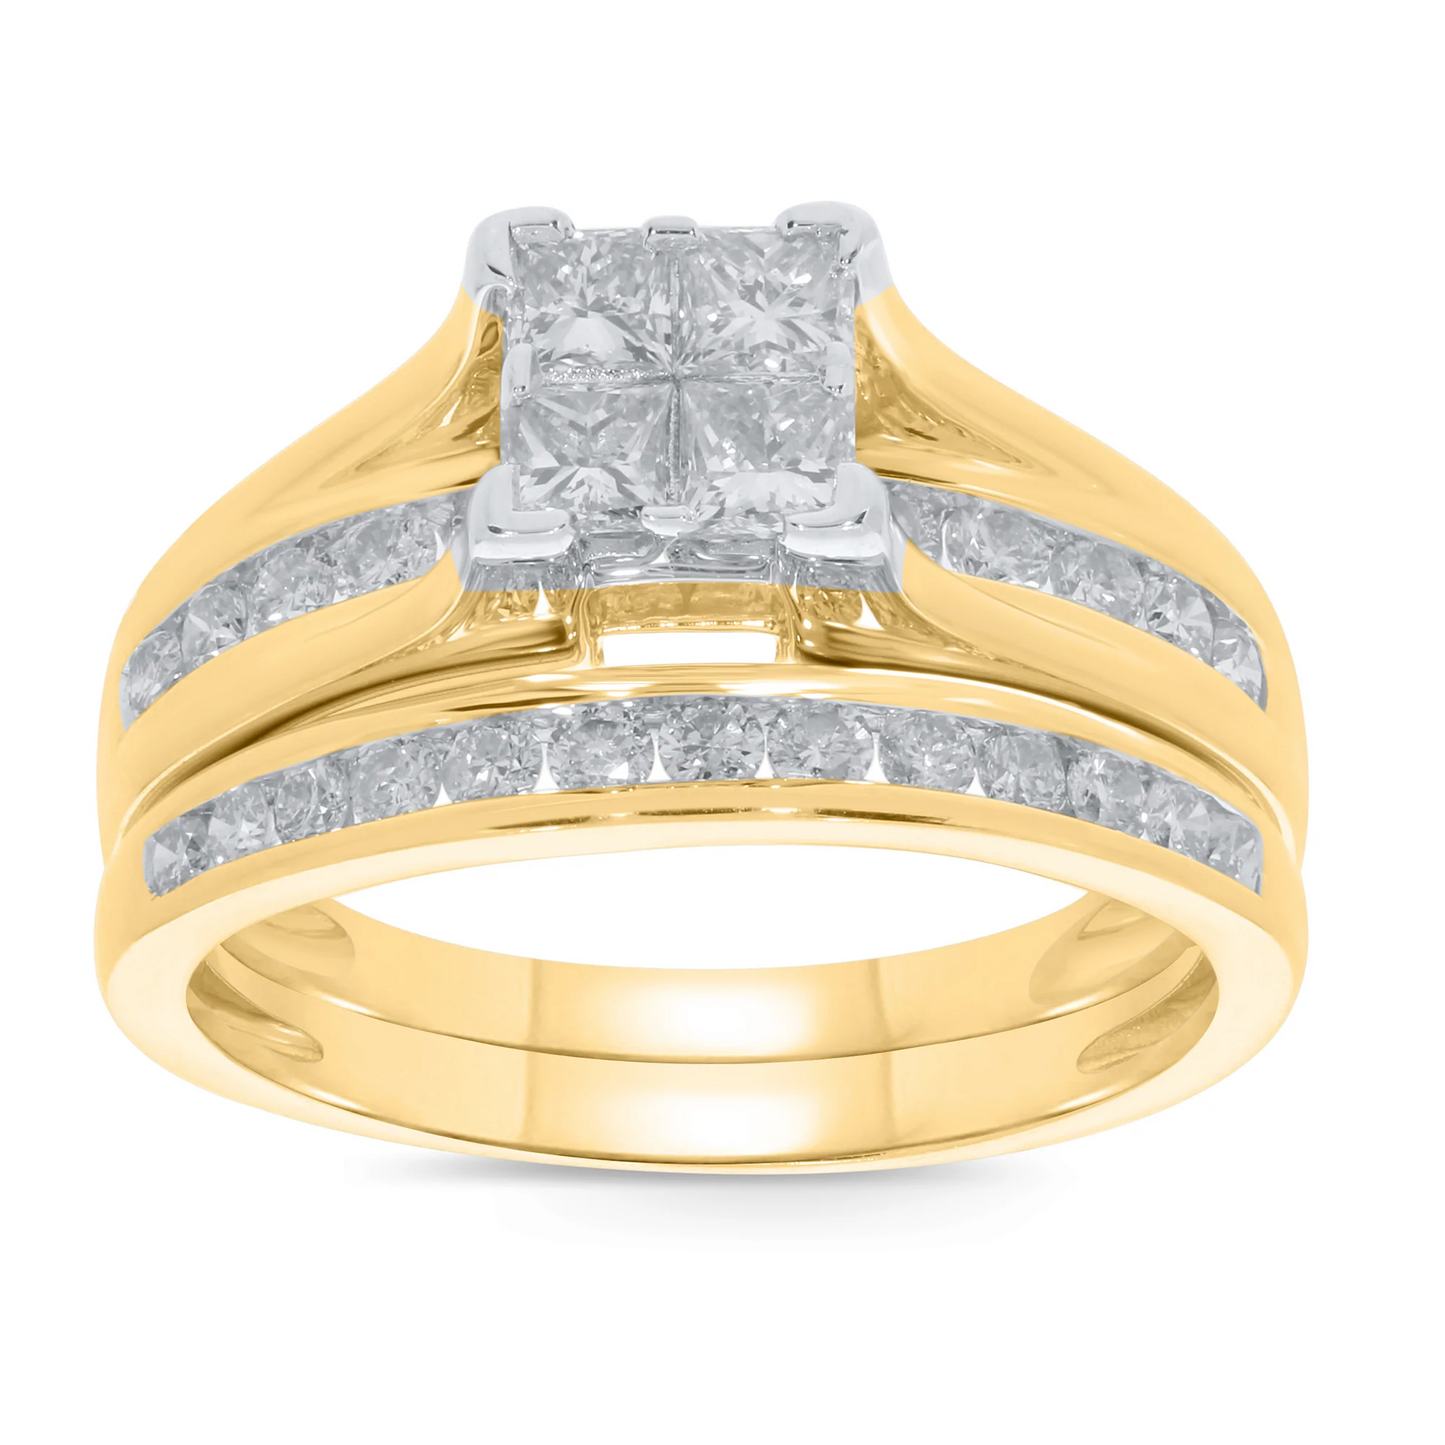 10K YELLOW GOLD 1.10 CARAT WOMENS REAL DIAMOND ENGAGEMENT RING WEDDING BAND SET / SKU RG01793-YG